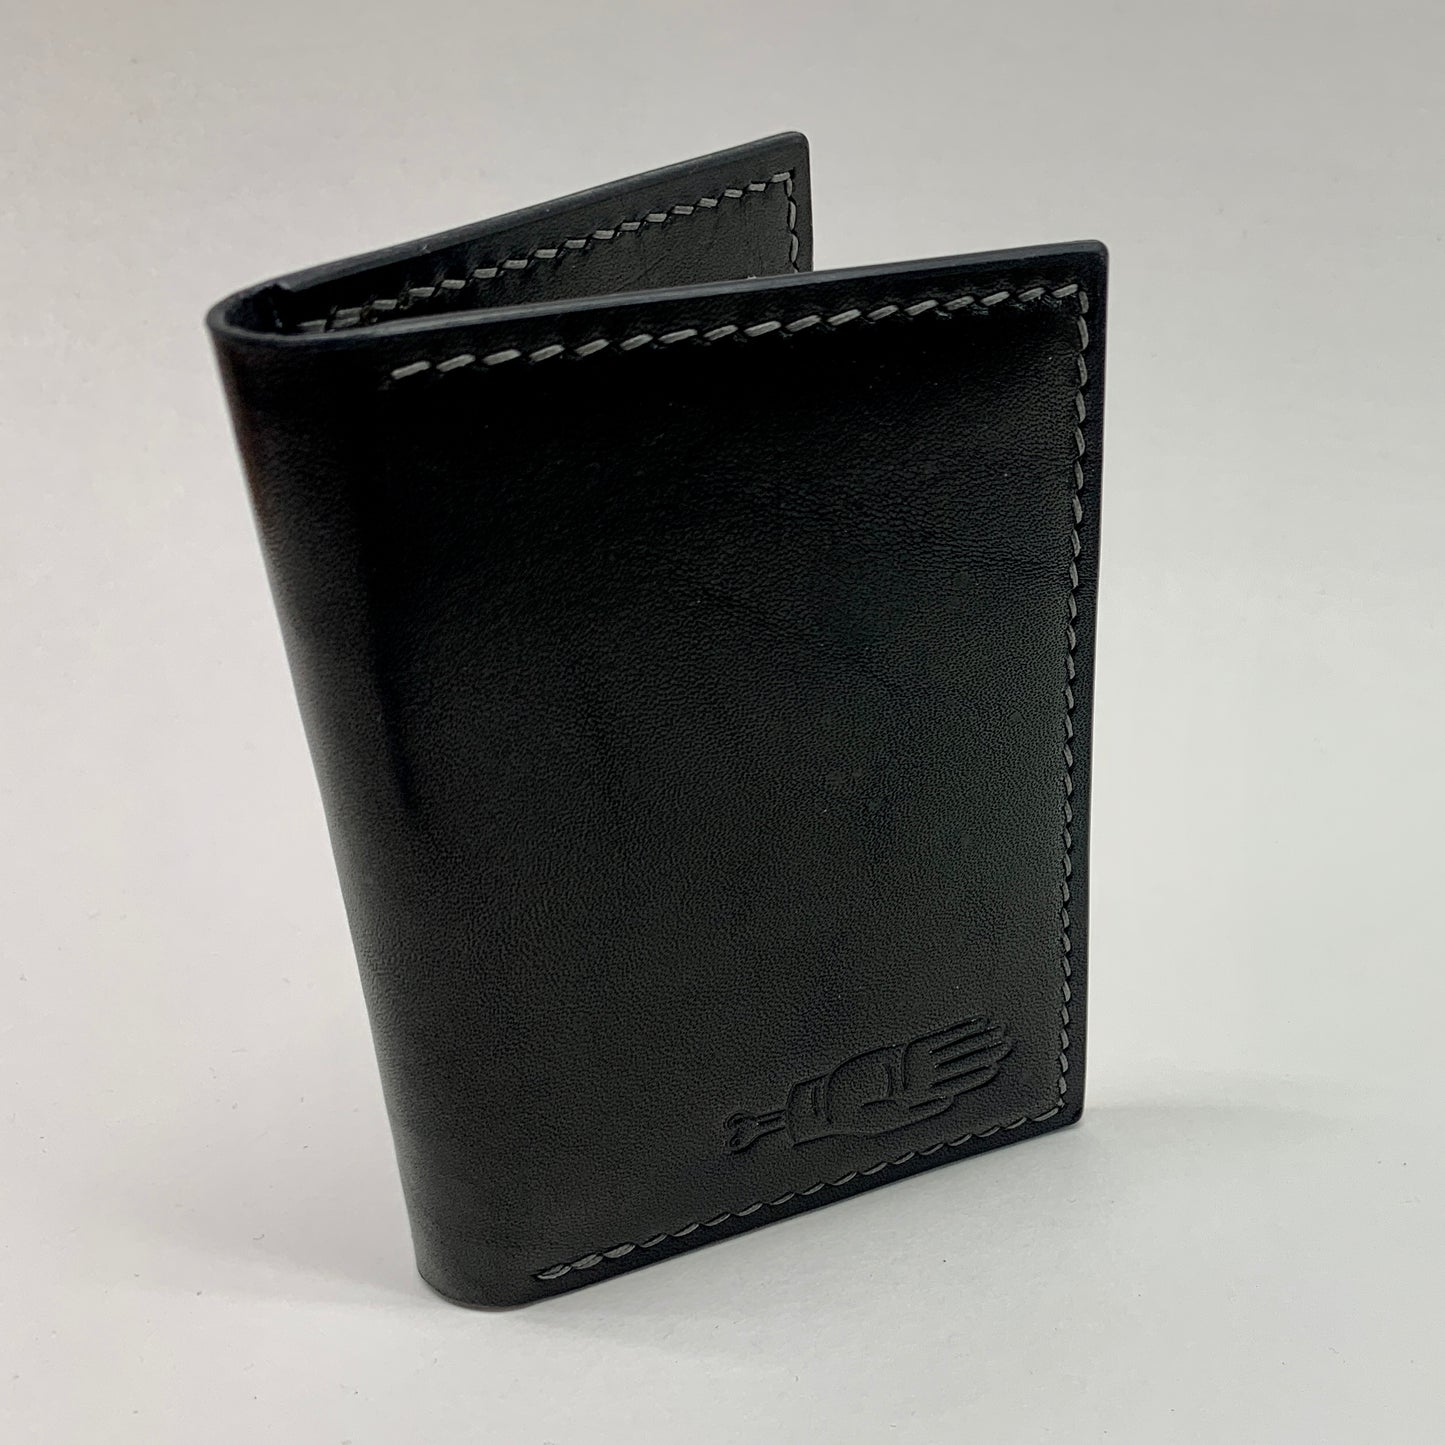 Goon Vertical Wallet - Marbled Poppy/Black/Grey